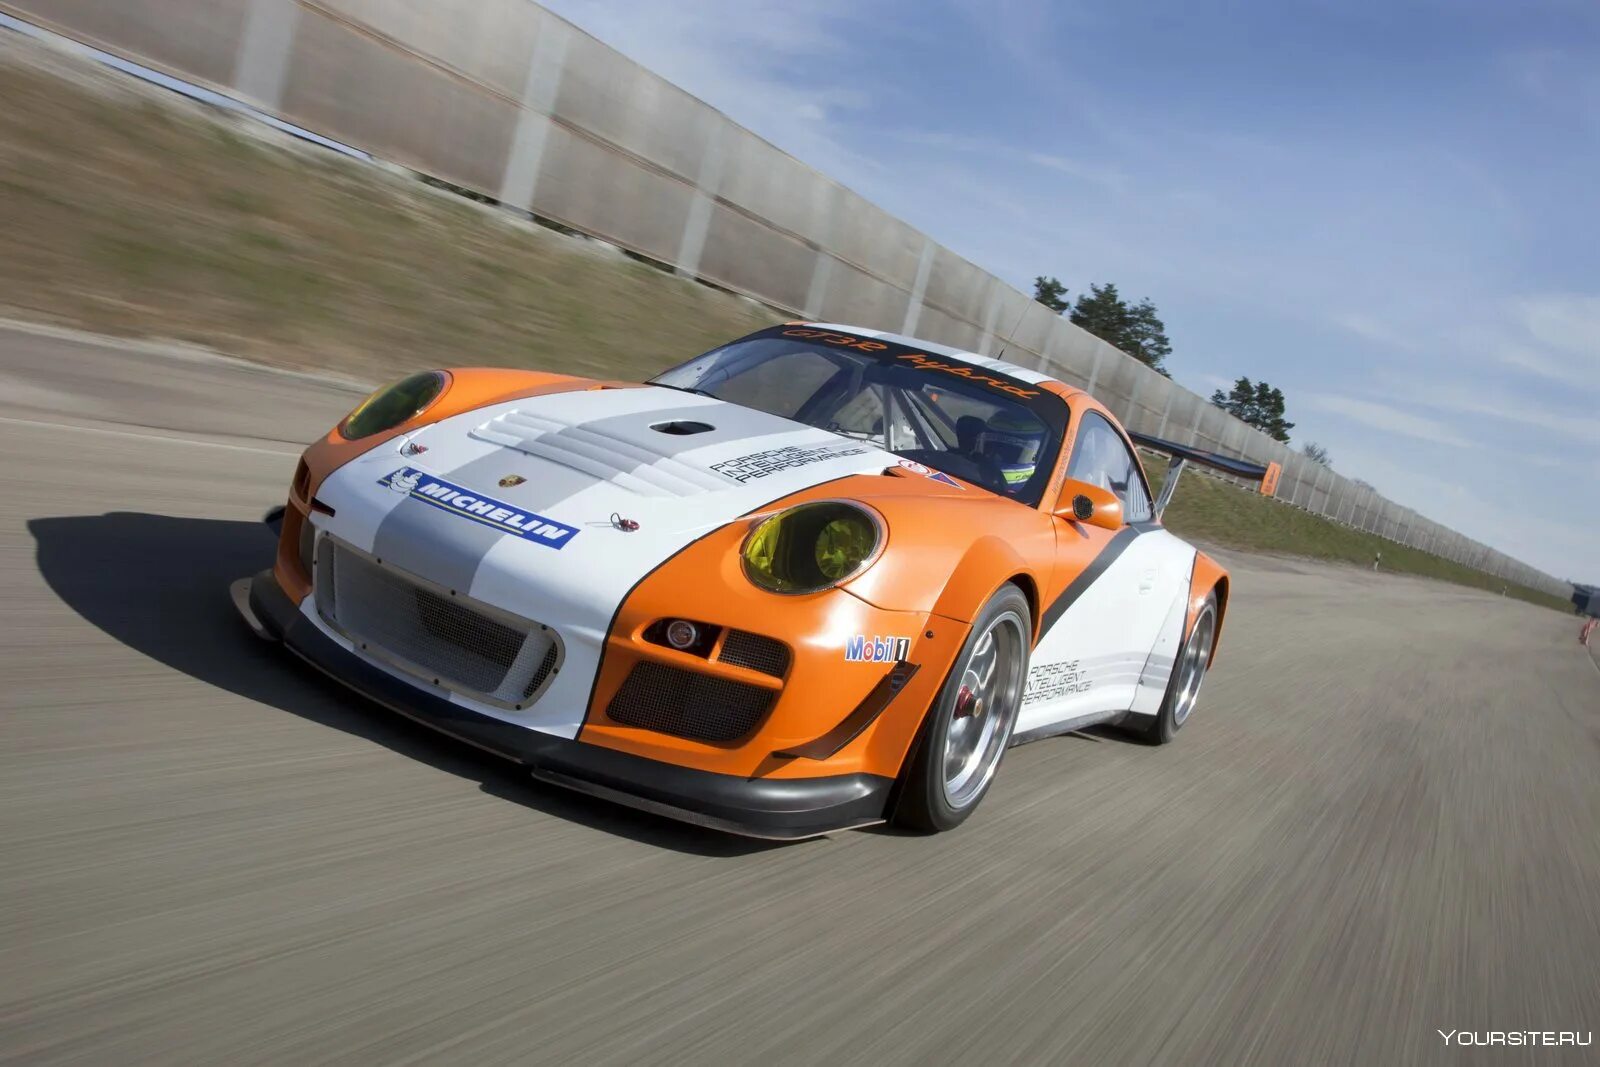 Фото гоночных машин. Порше 911 gt3 r Hybrid. Porsche 911 gt3 Nurburgring Edition. Porsche 911 gt3 r 2000. 911 Gt3 r Hybrid Concept.